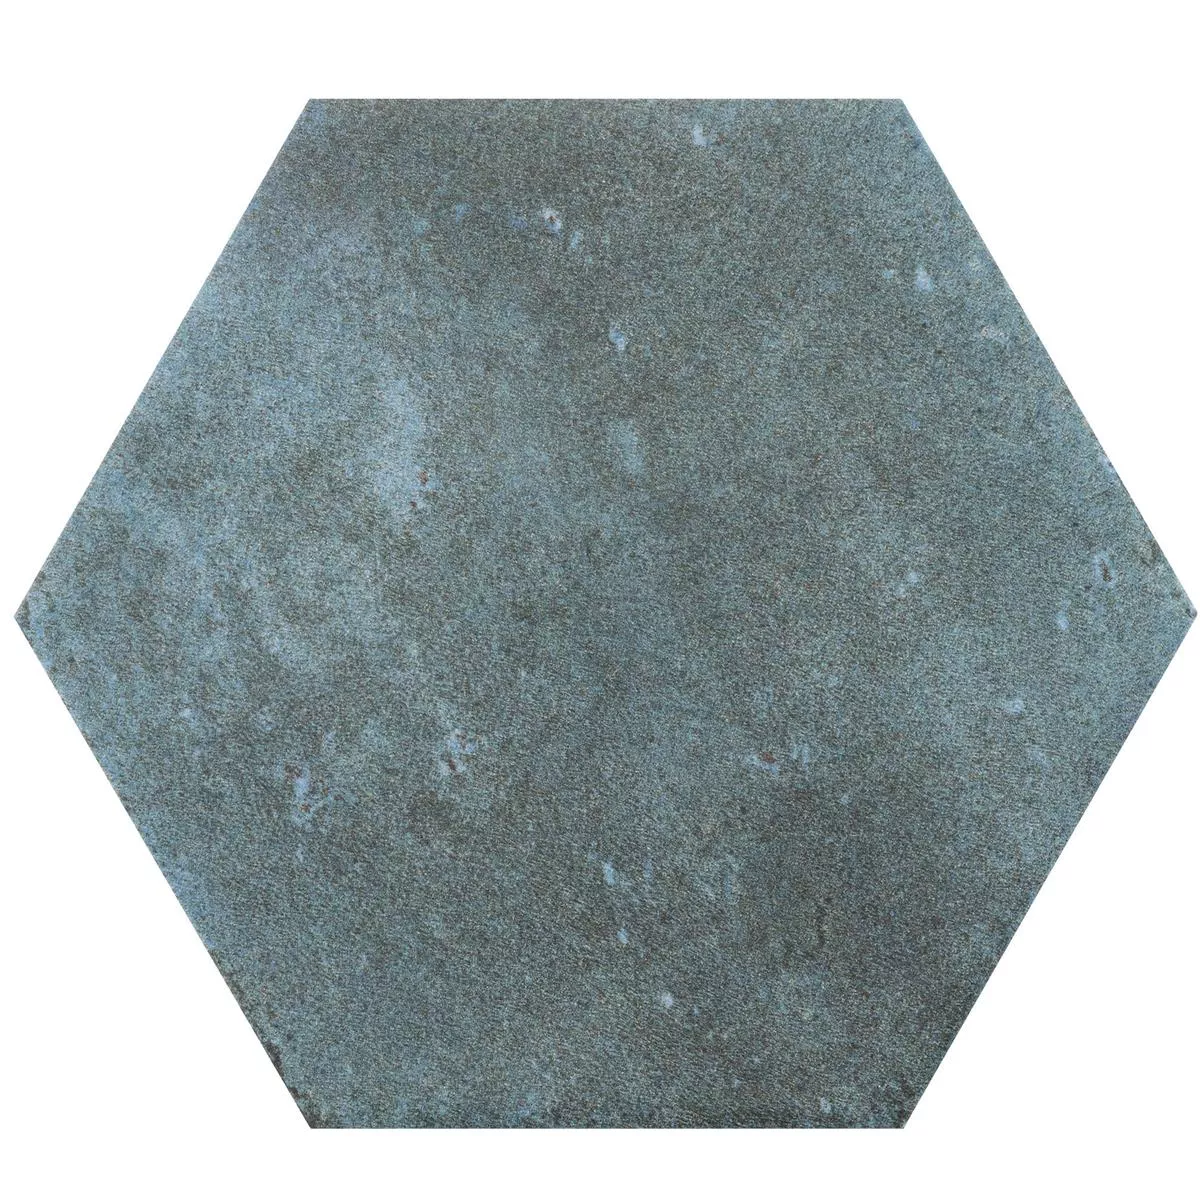 Vzorek Podlahové Dlaždice Arosa Matný Šestiúhelník Pacifik Modrá 17,3x15cm